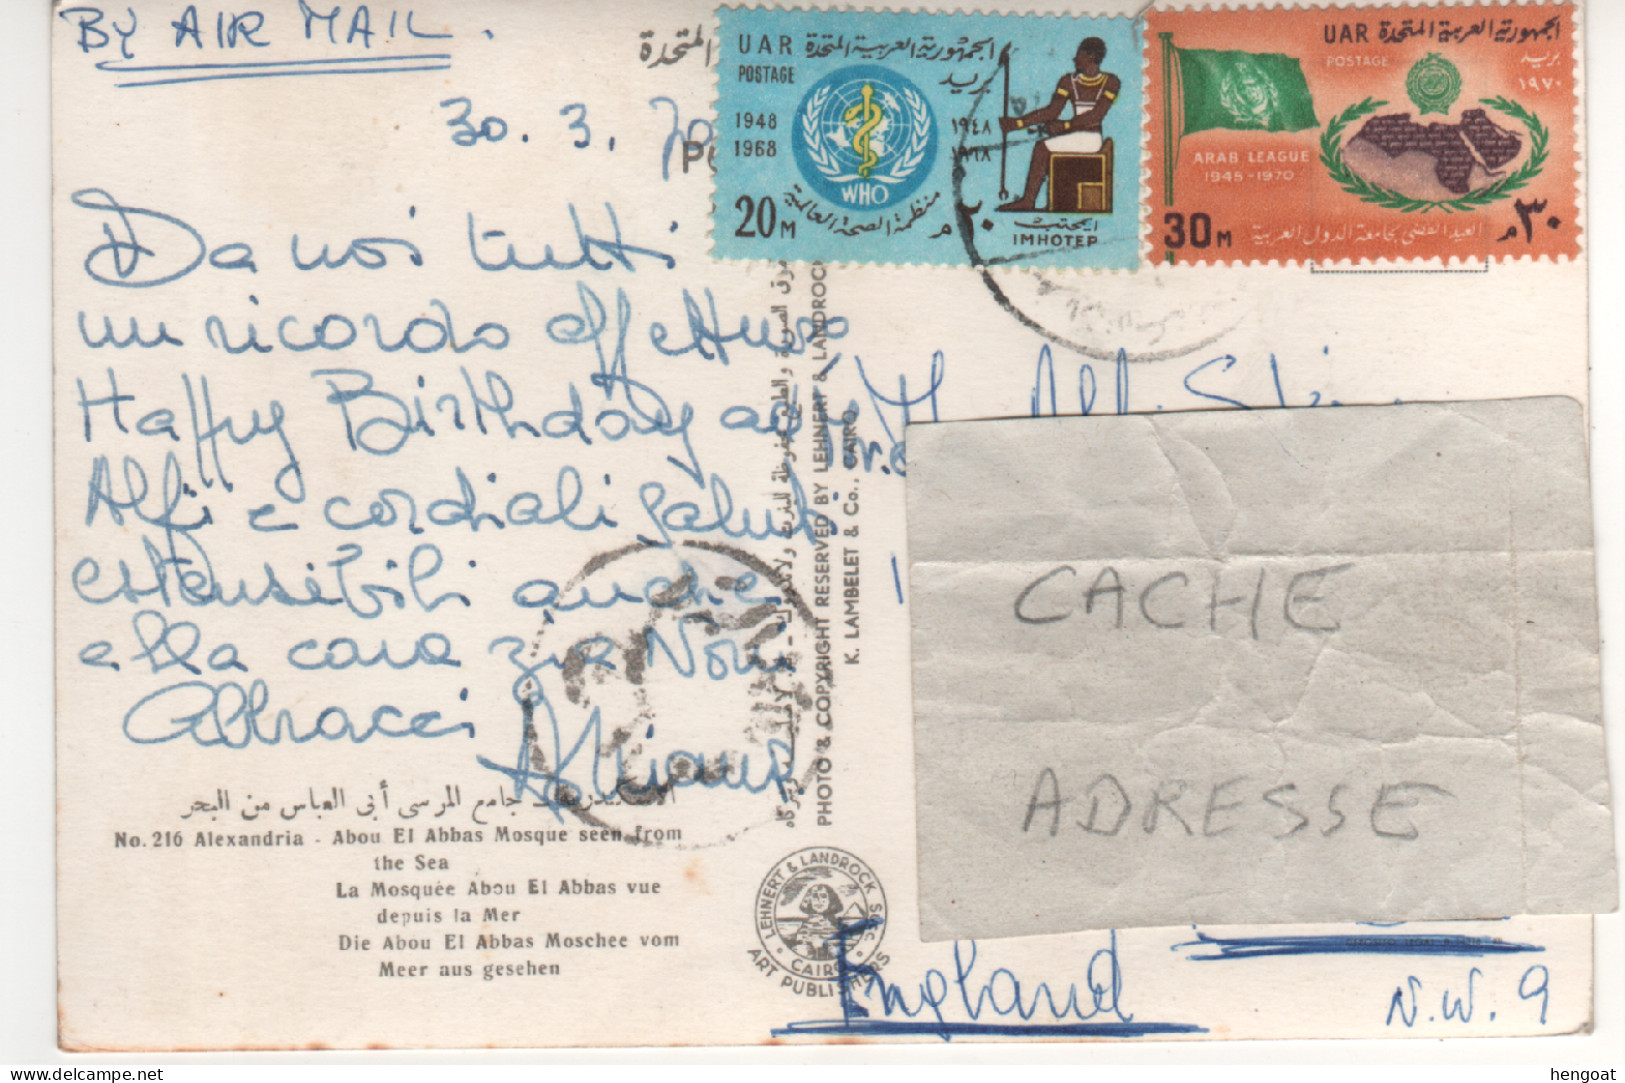 Timbres , Stamps " 1948 -1968 WHO , Imhotep ; 1945 - 1970 Ligue Arabe " Sur CP , Carte , Postcard Du 30/03/70 - Briefe U. Dokumente